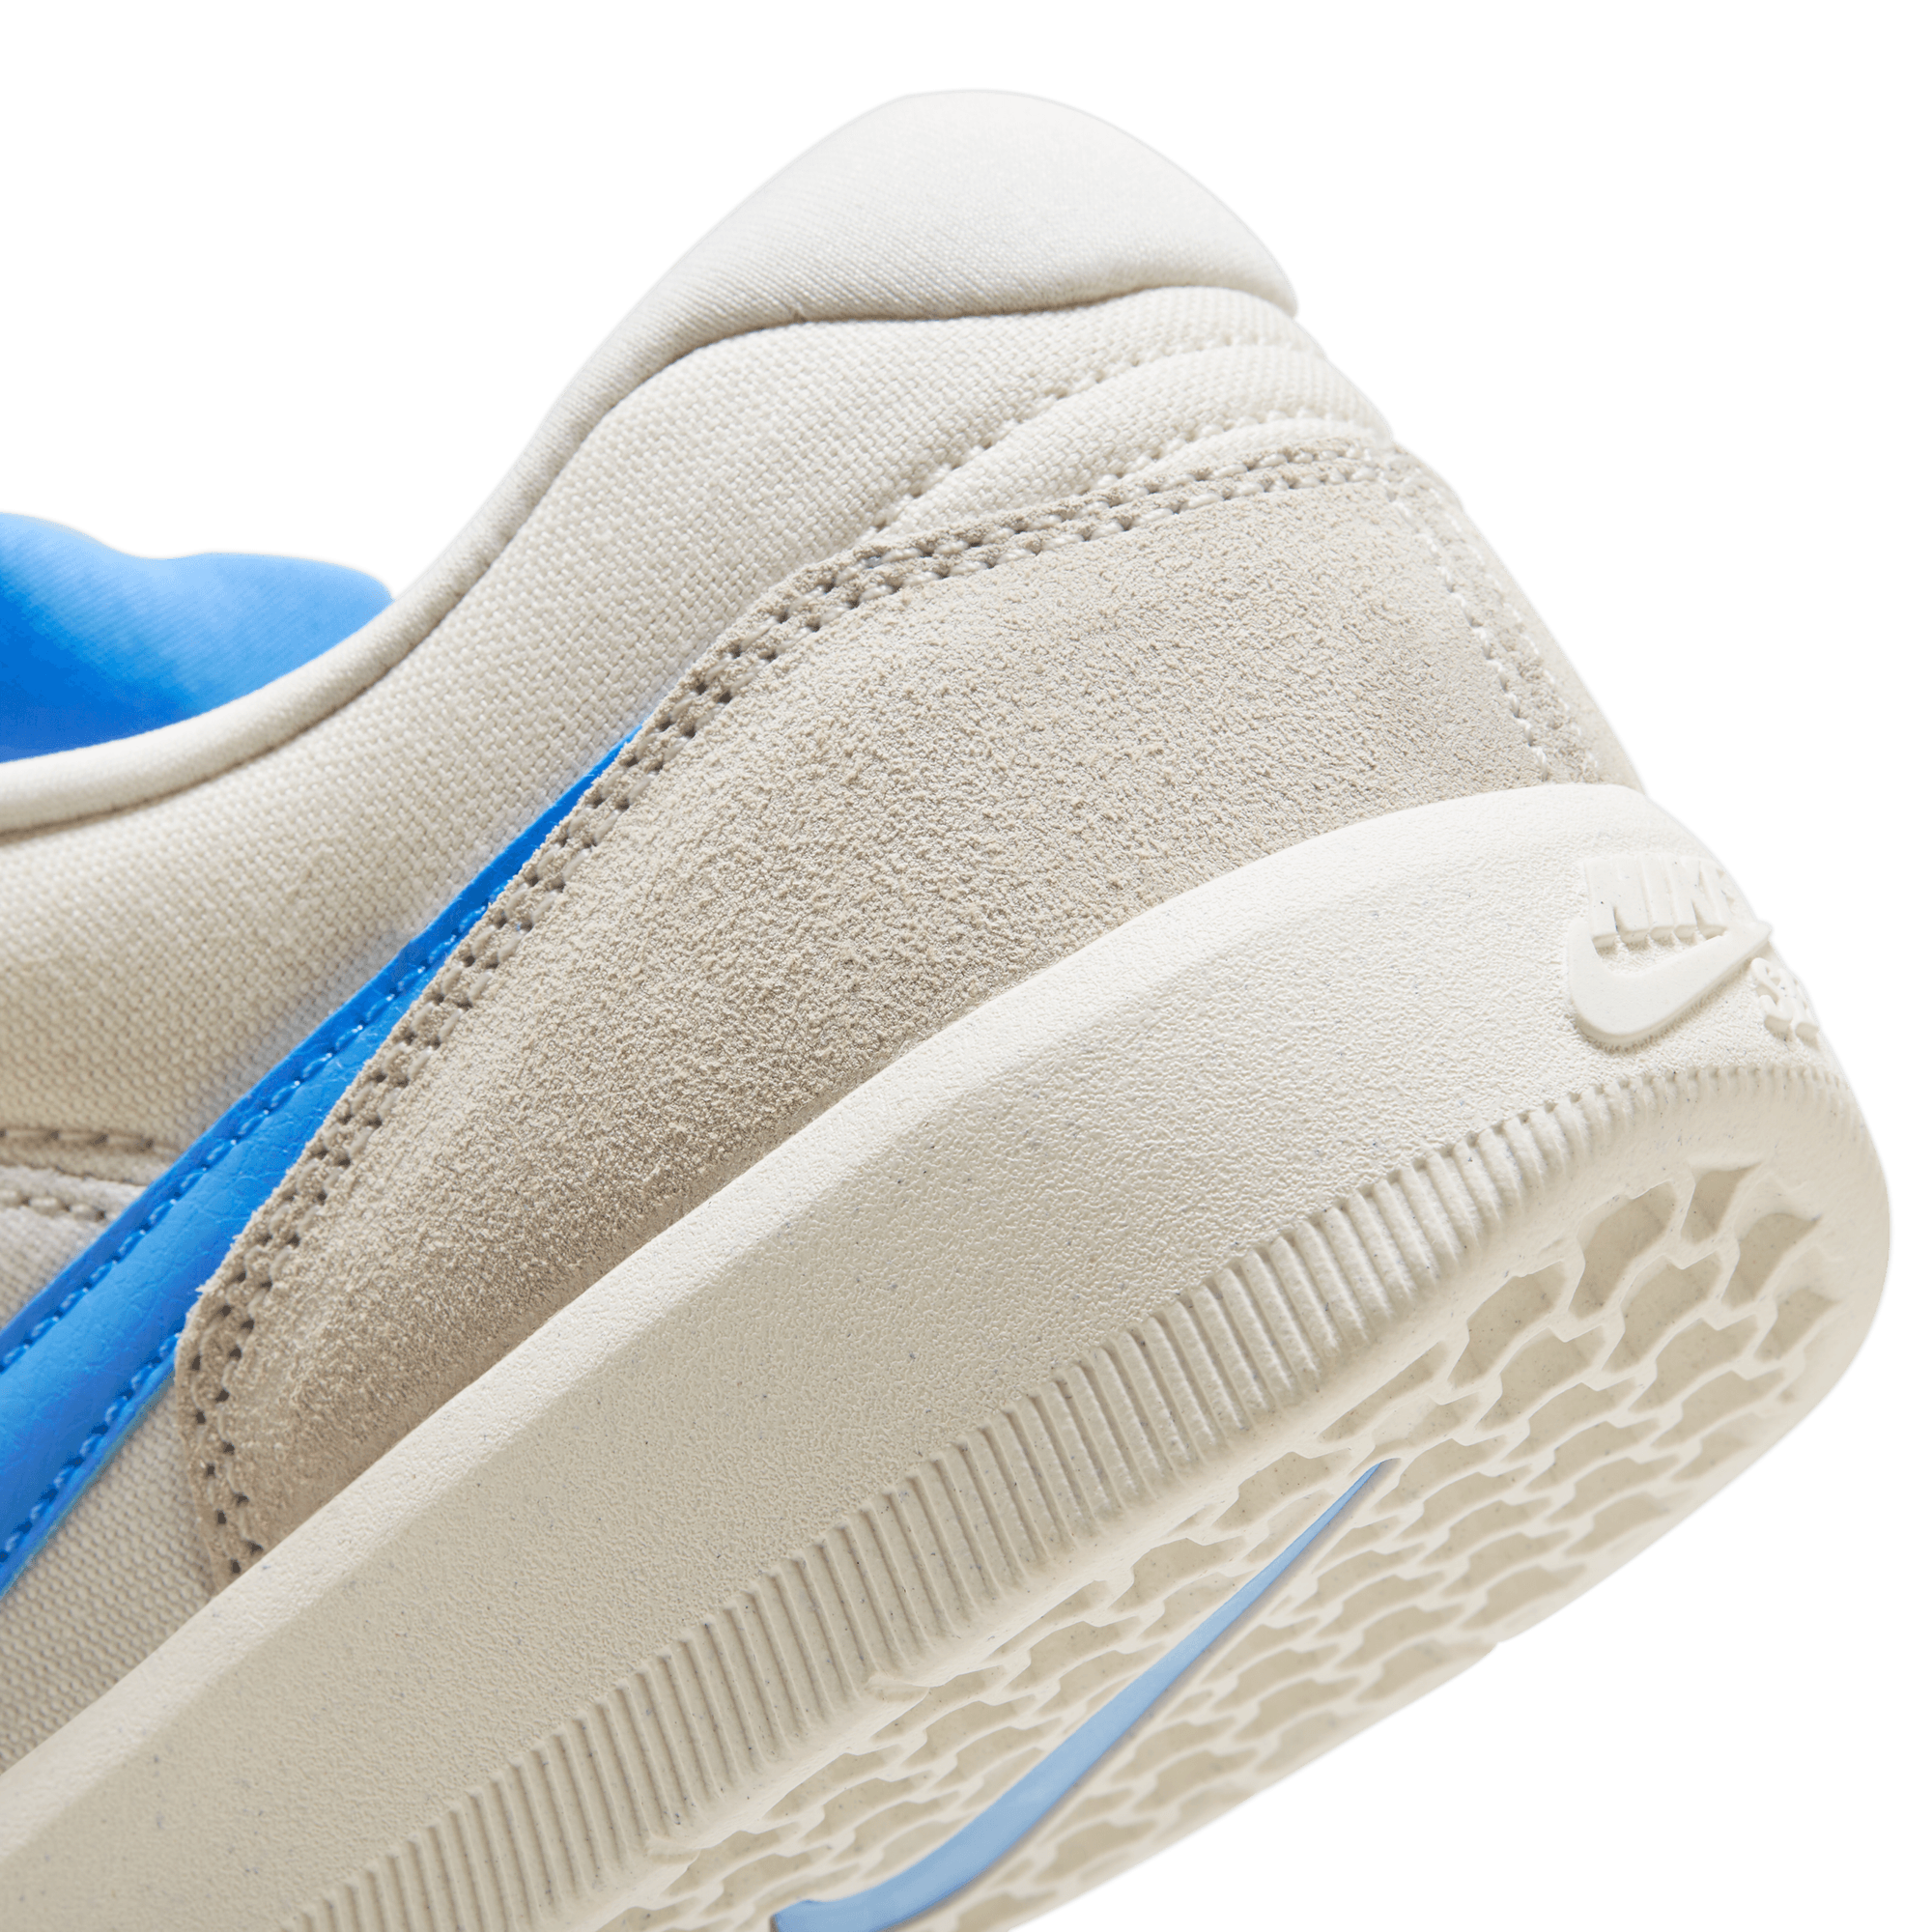 Summit White/University Blue Force 58 Nike SB Skate Shoe Detail